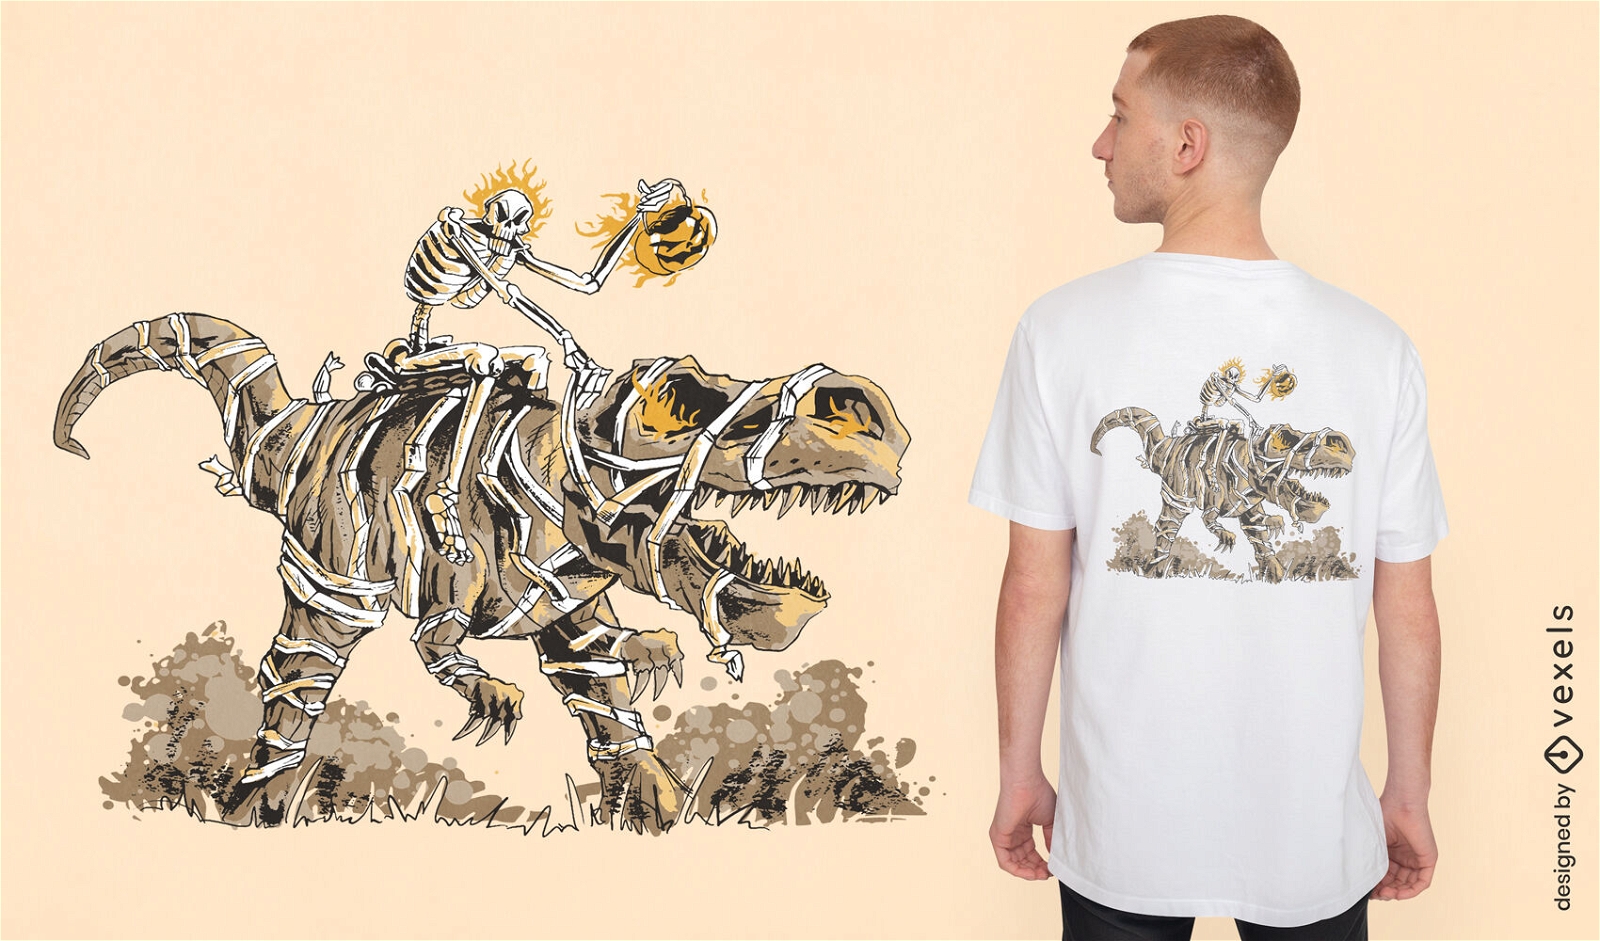 Skeleton riding mummy dinosaur t-shirt design